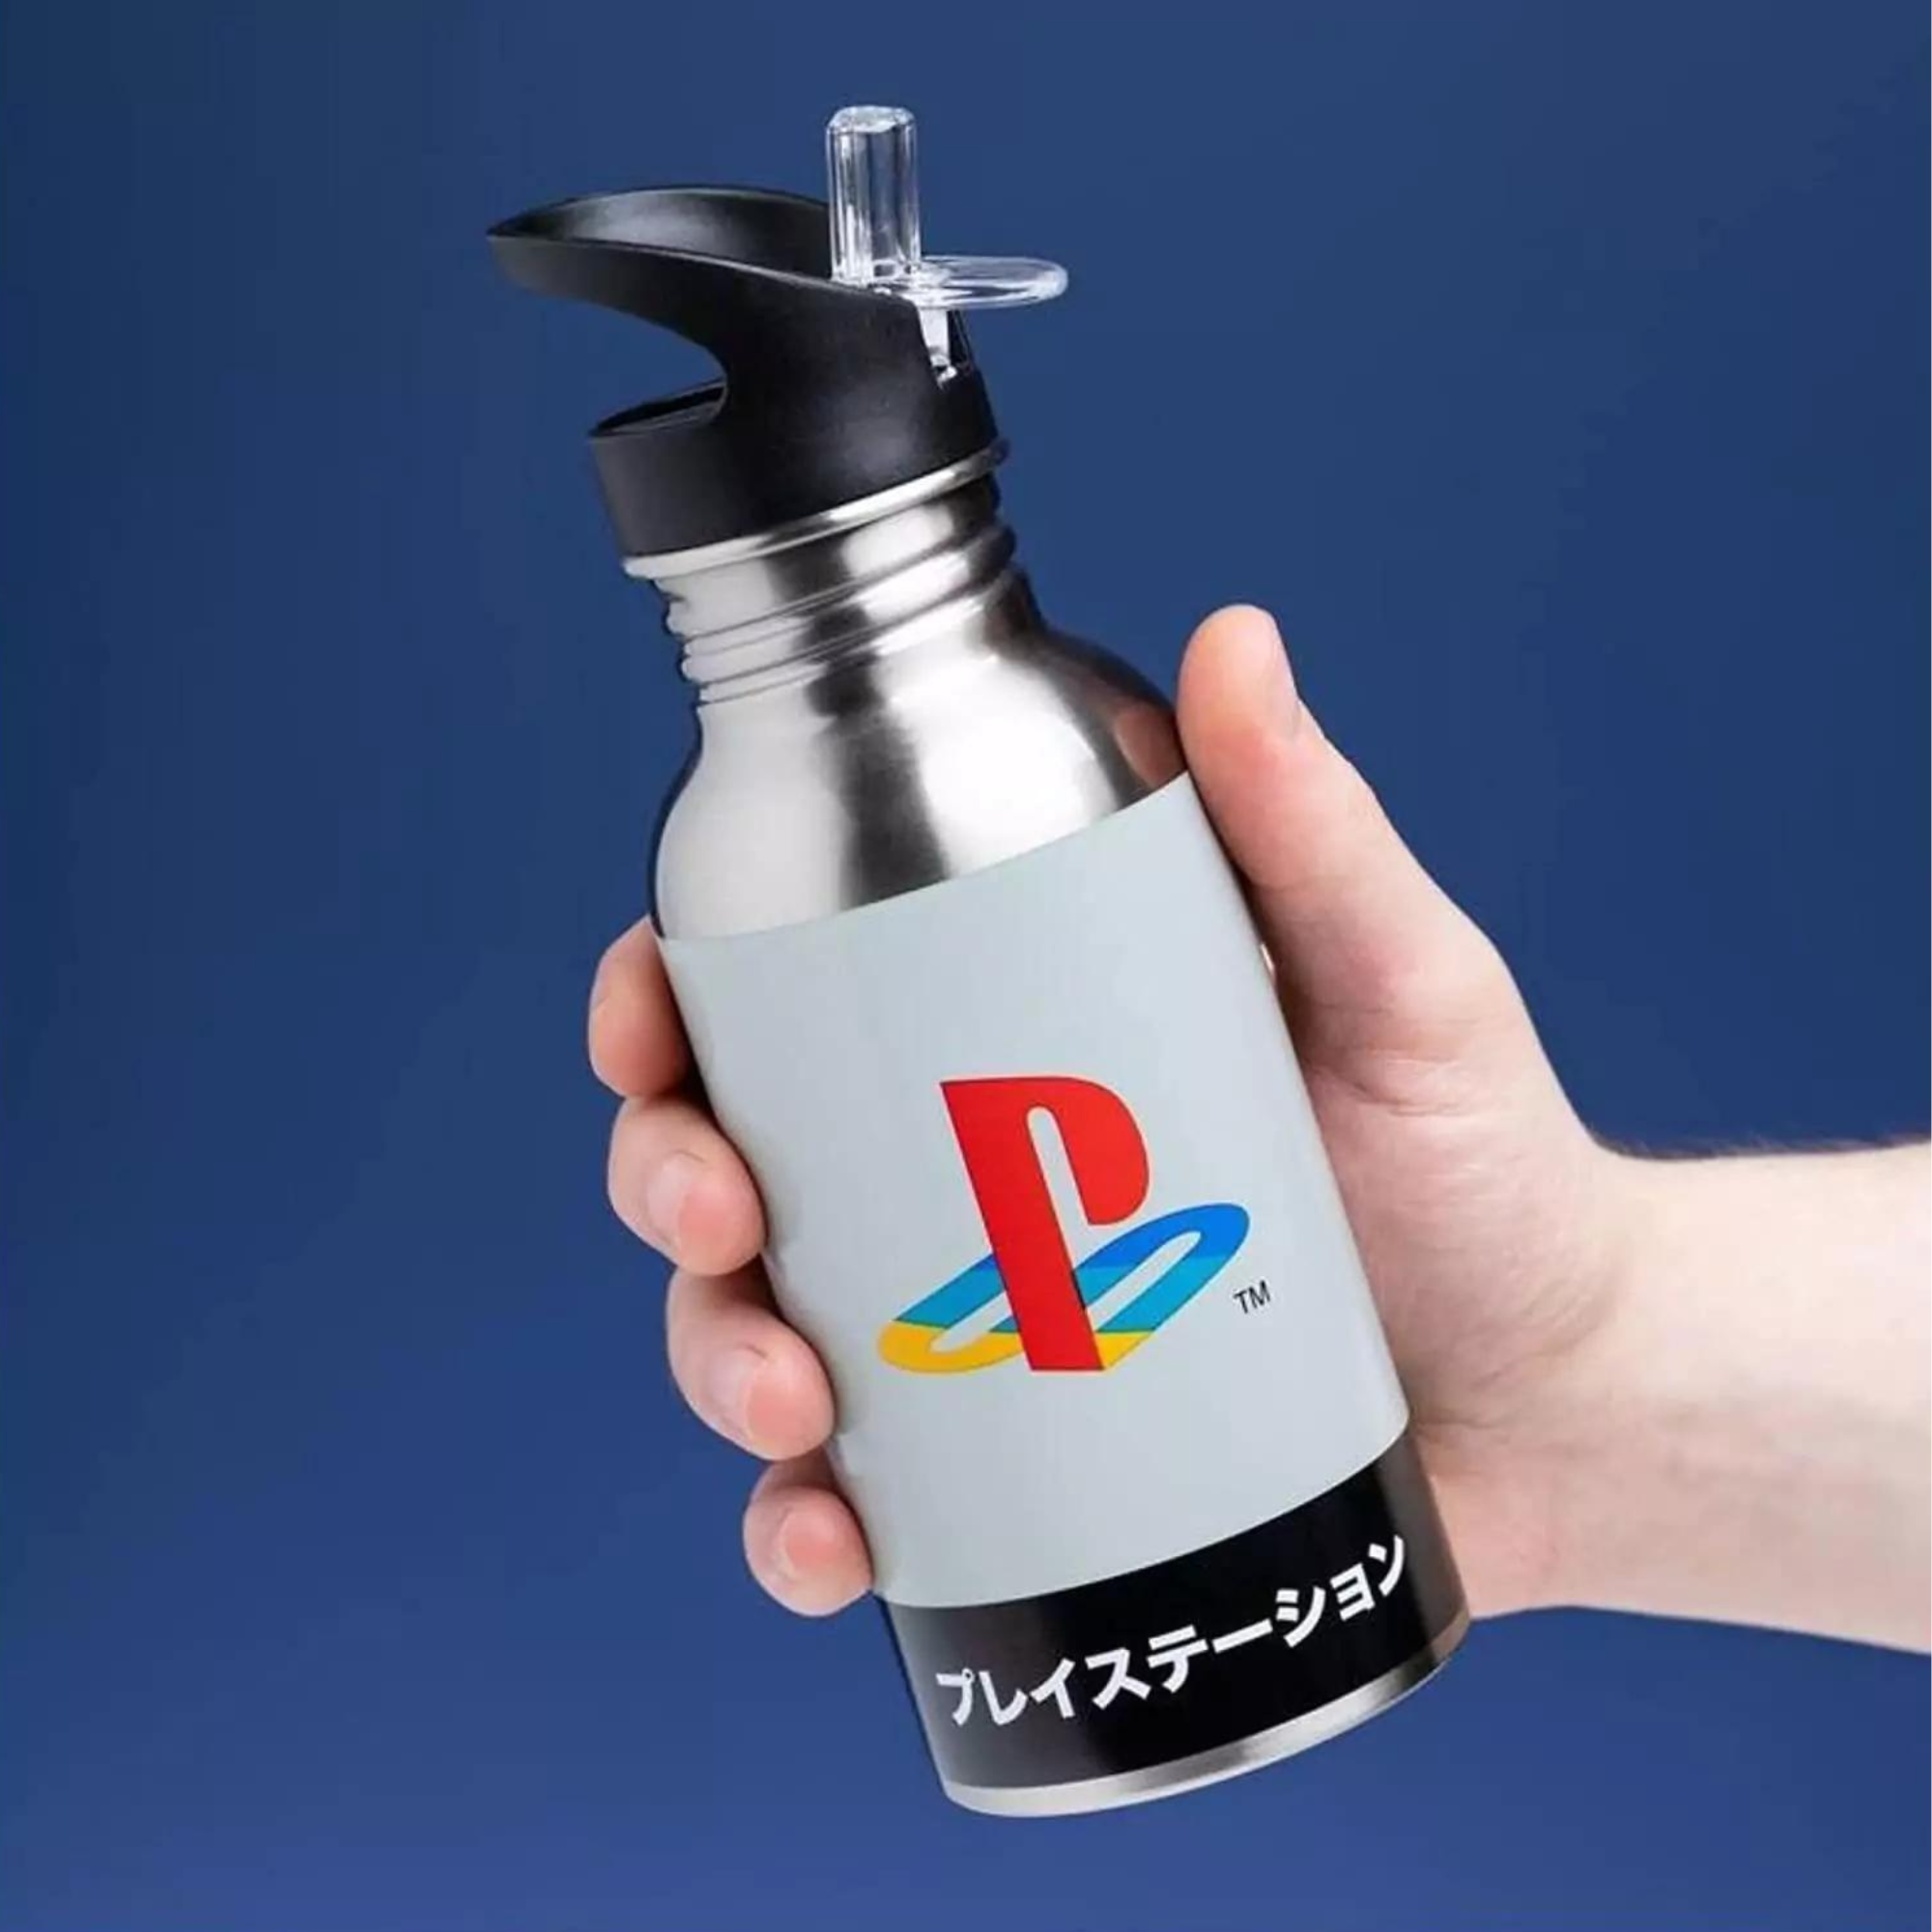 Playstation Classic Logo Design Gift Set - Glass Stein & Steel Water Bottle - Toptoys2u